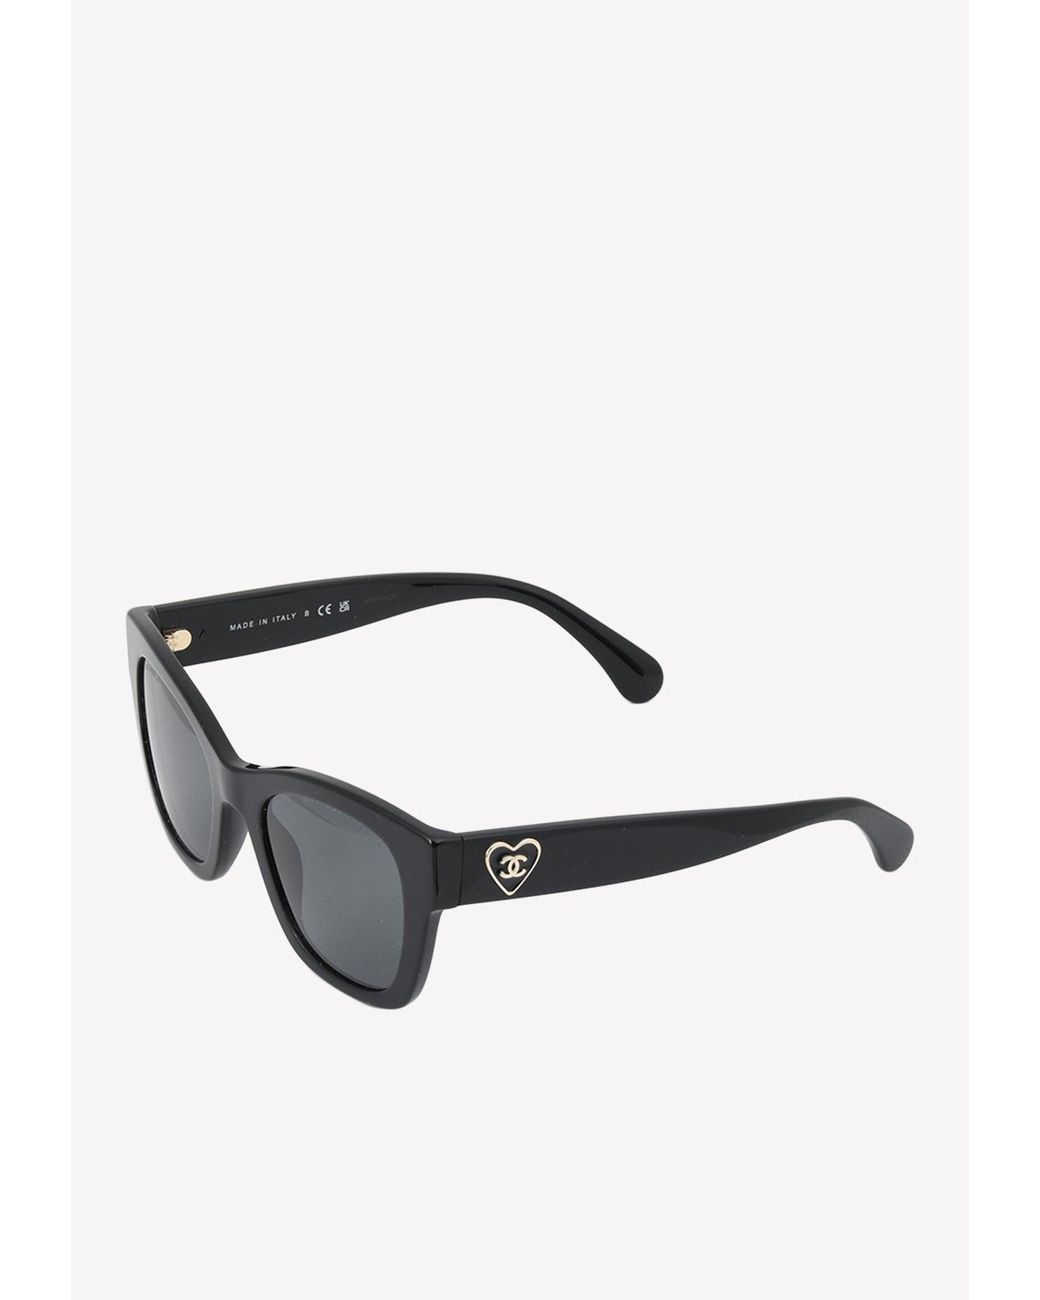 Actualizar 60+ imagen chanel charms sunglasses